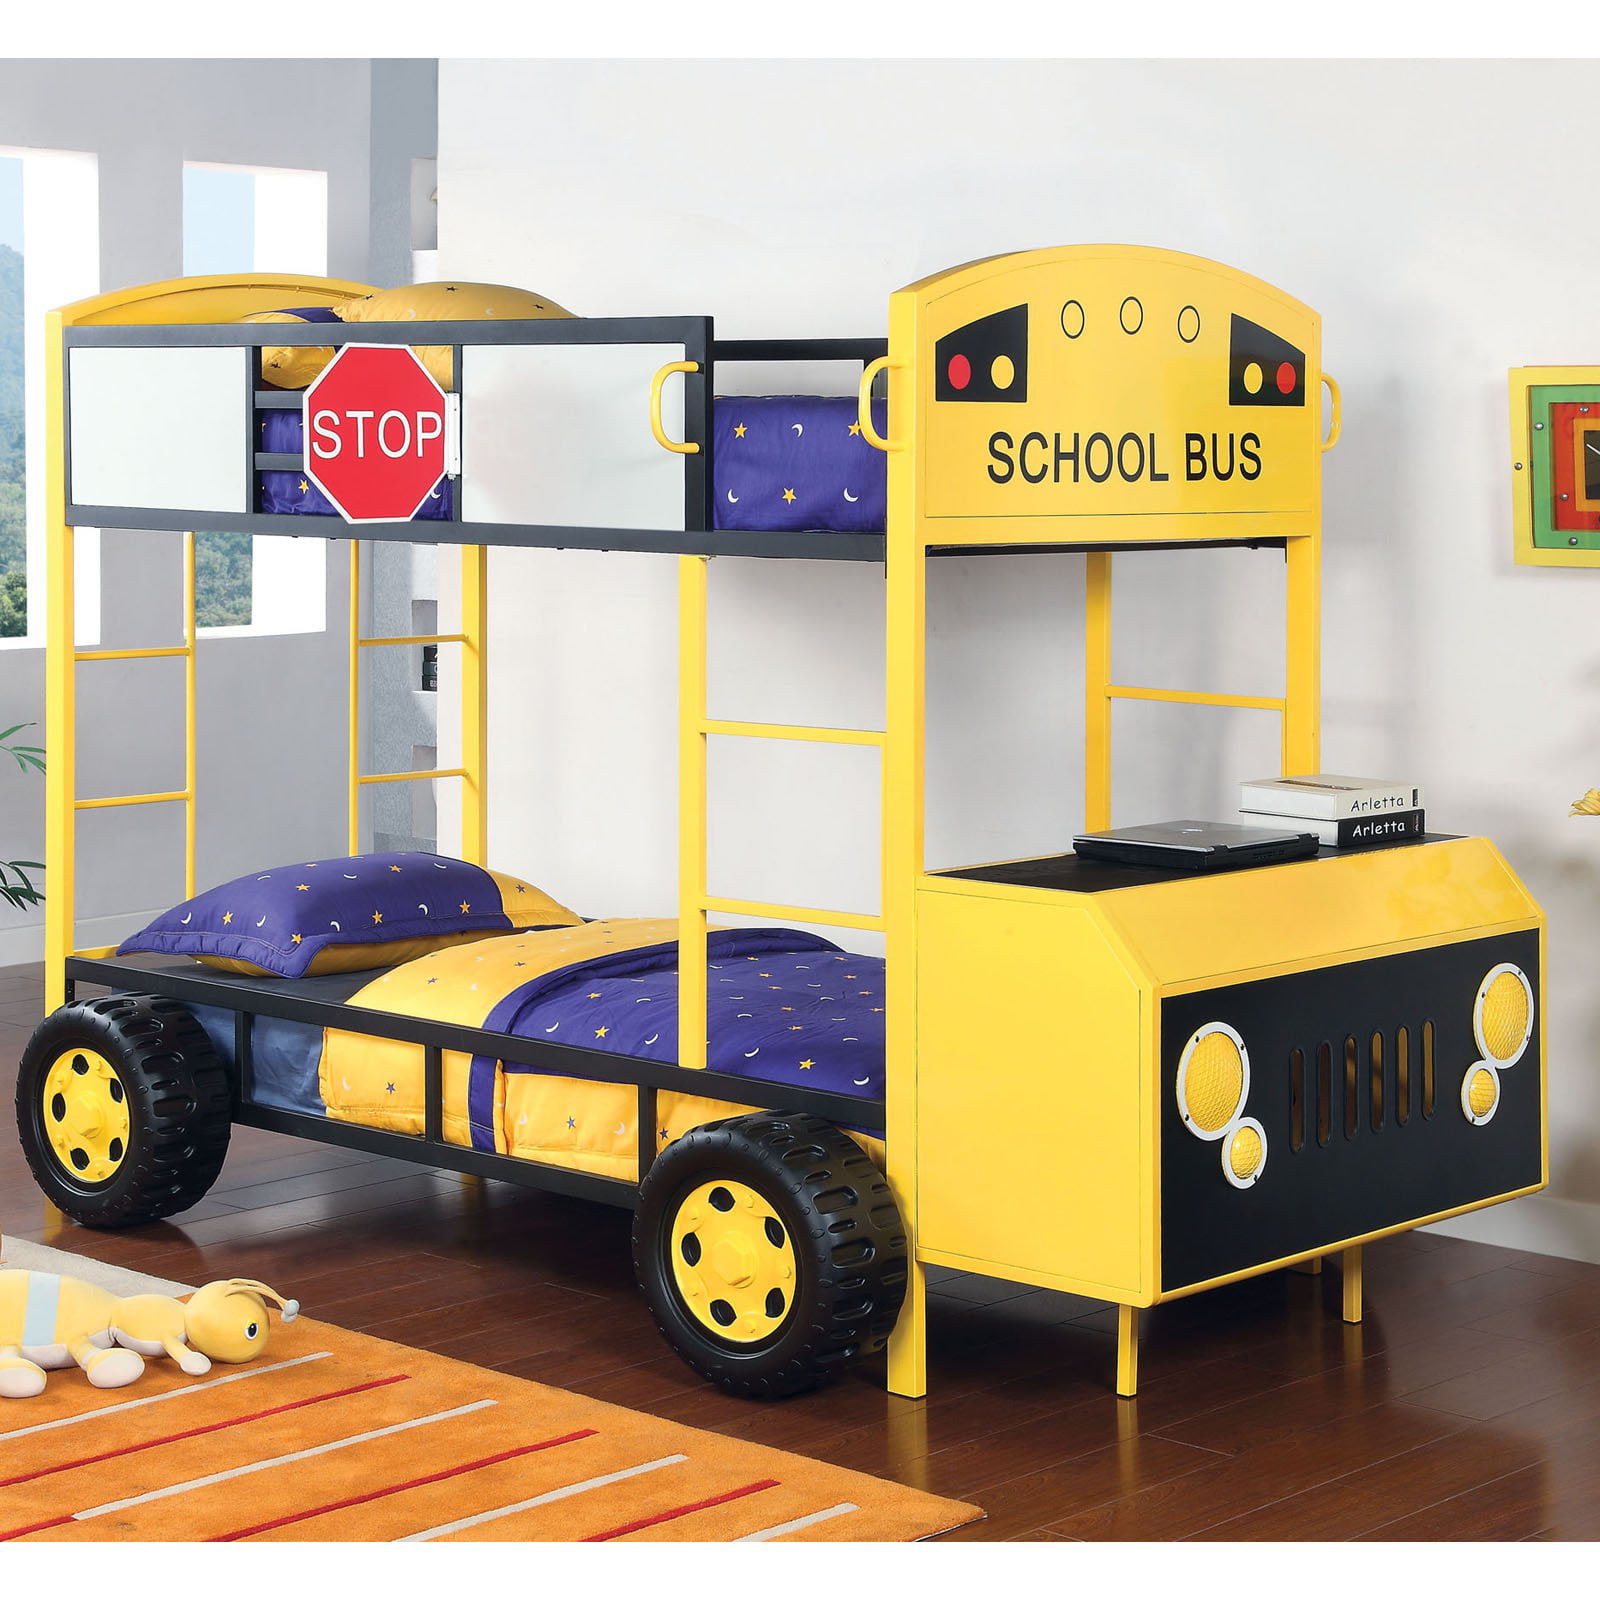 Parke Fun Twin School Bus Inspired Bunk, Bus Bunk Bed